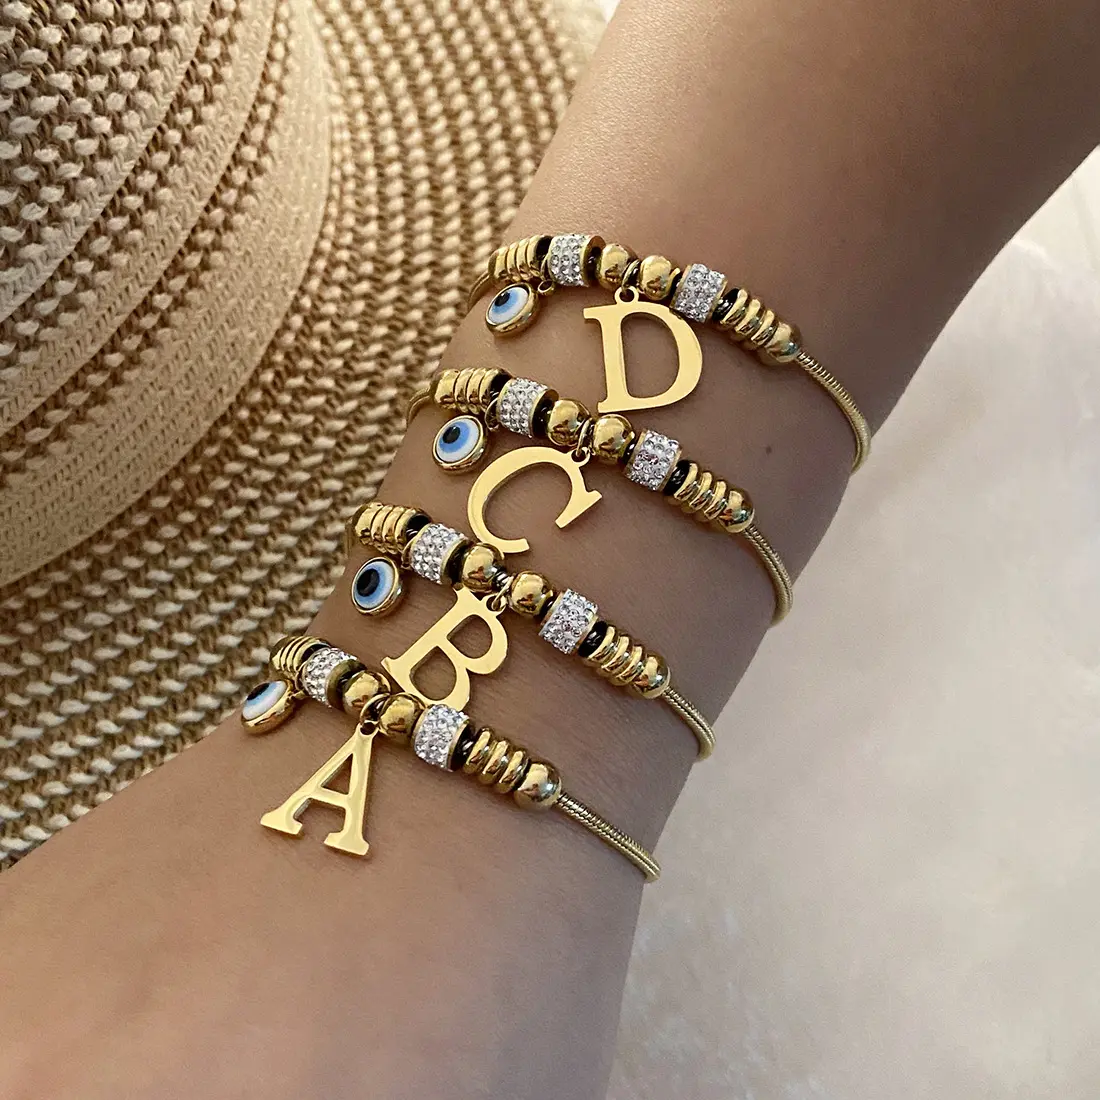 Perhiasan A-Z huruf alfabet berlapis emas 18k baja tahan karat Fashion kustom kualitas tinggi hadiah gelang huruf awal